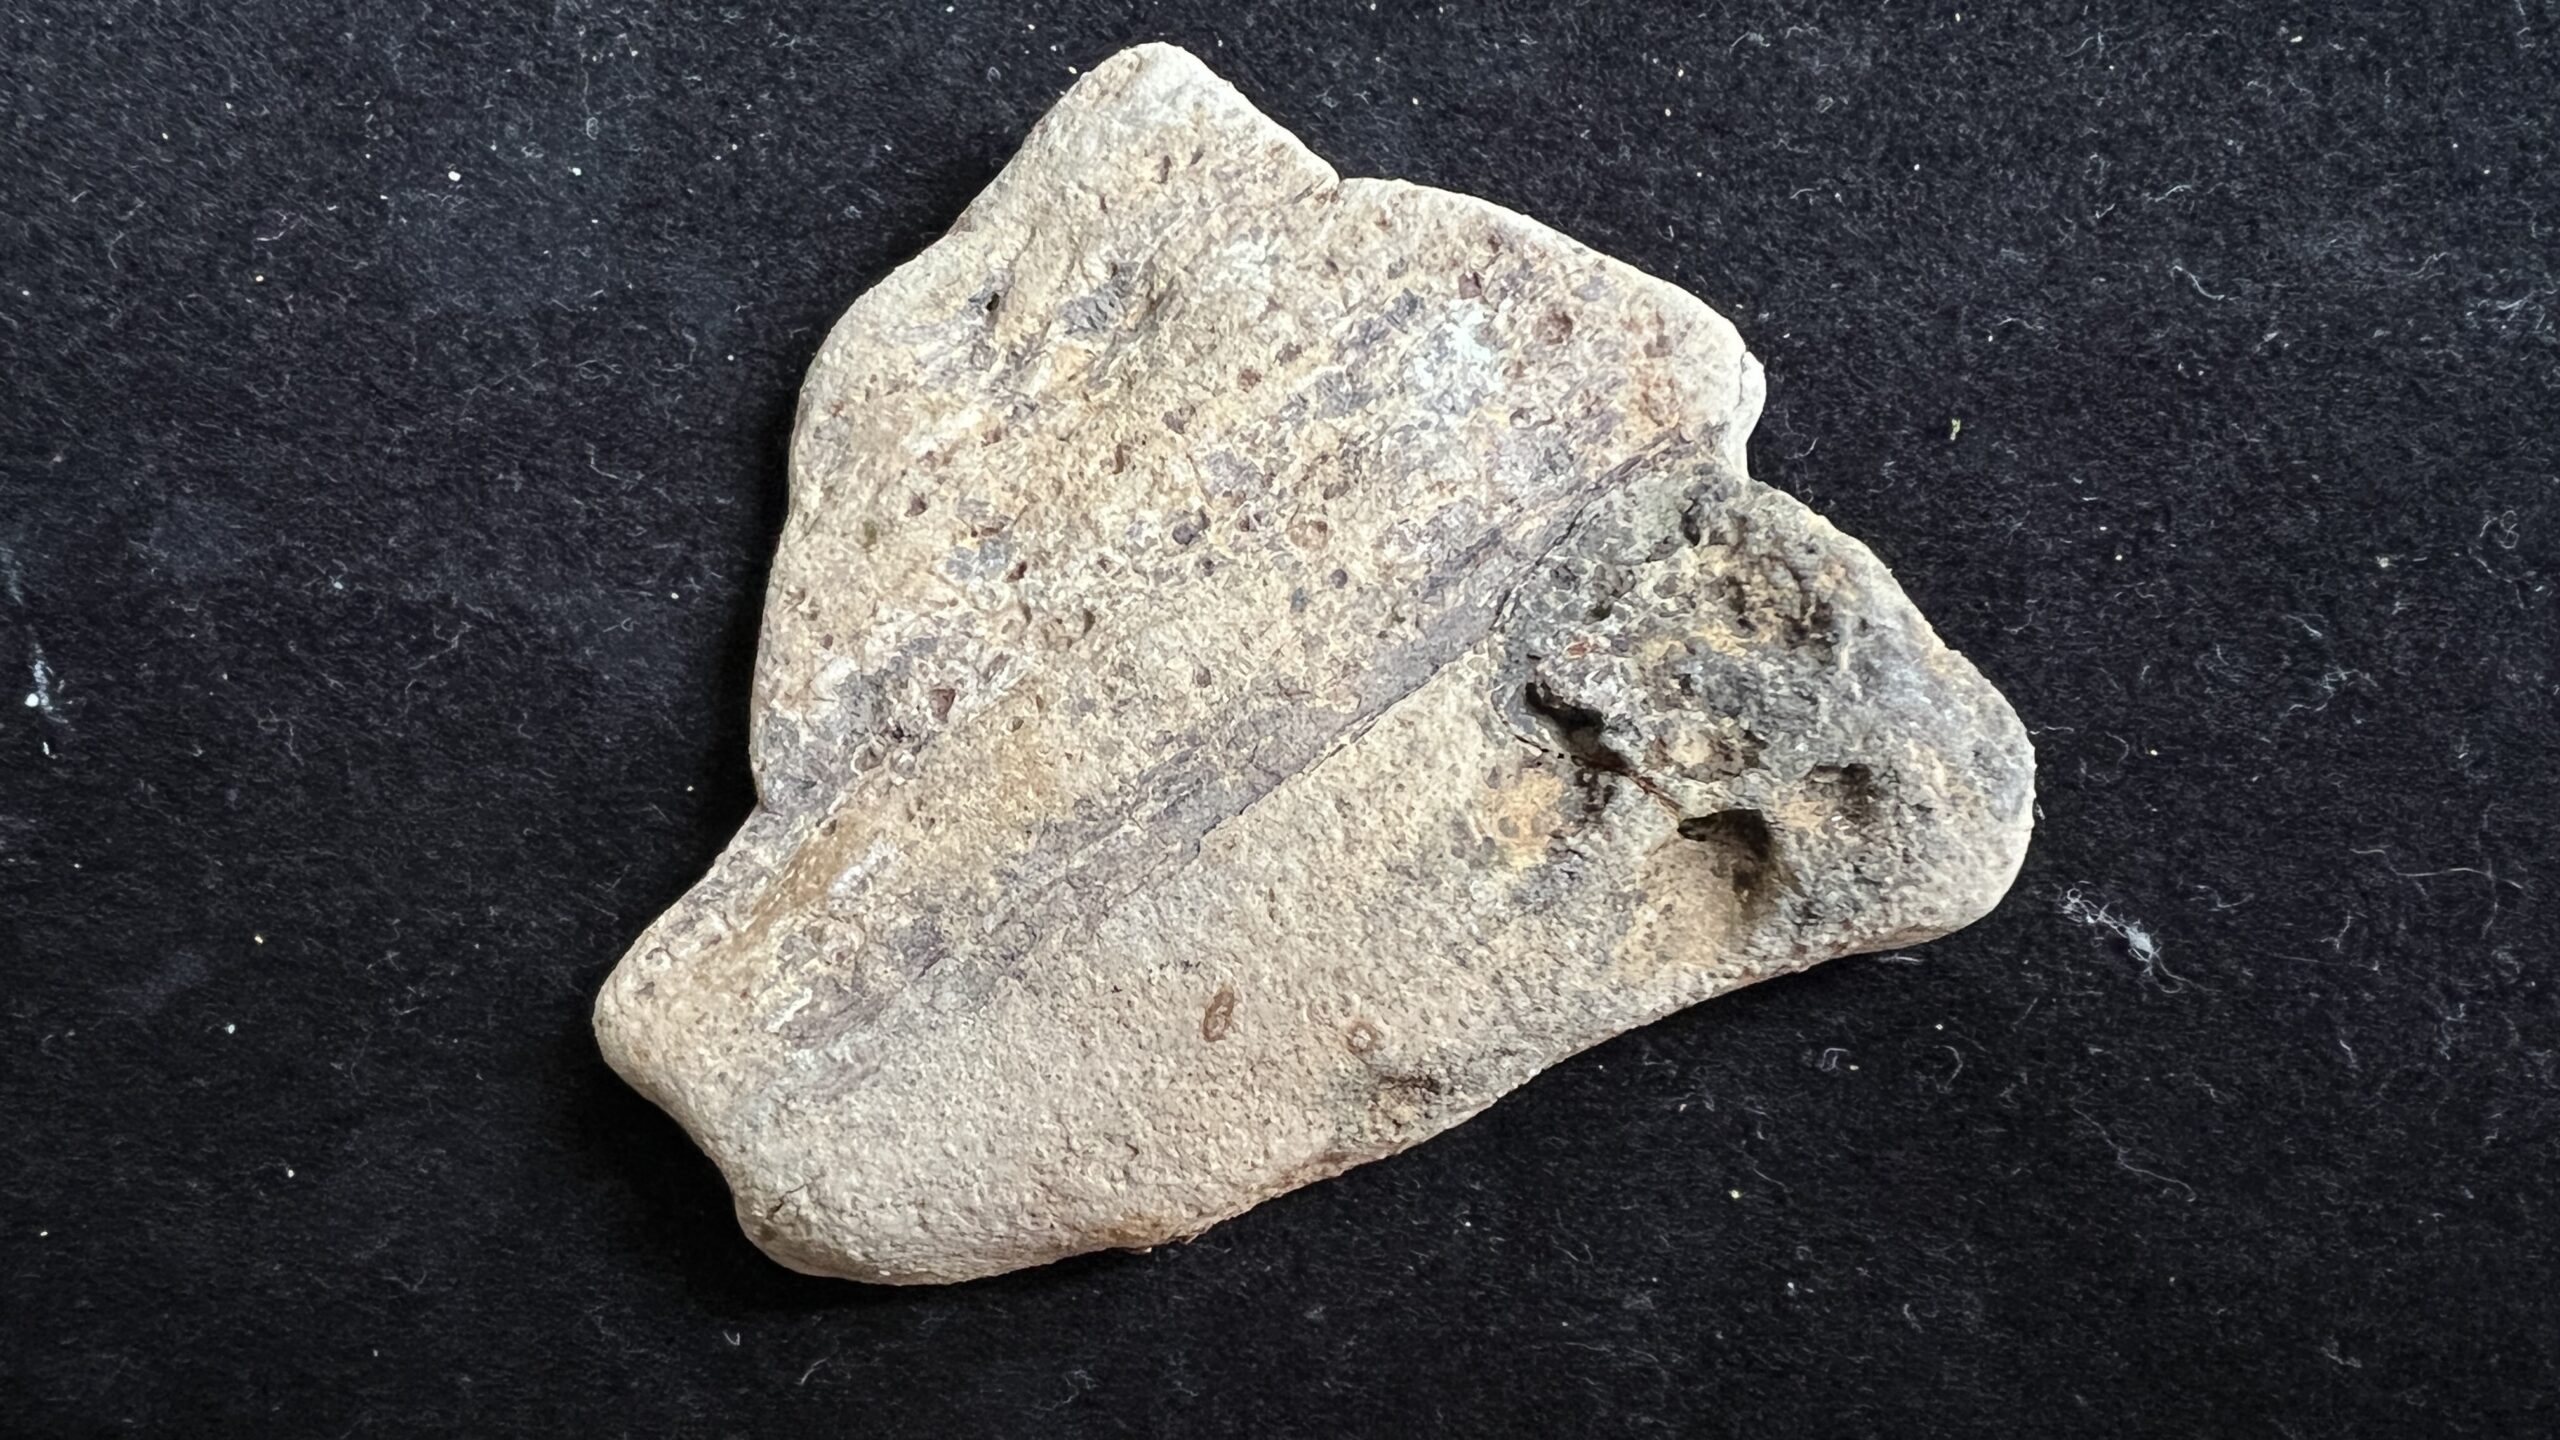 Fossilised Whale Bone